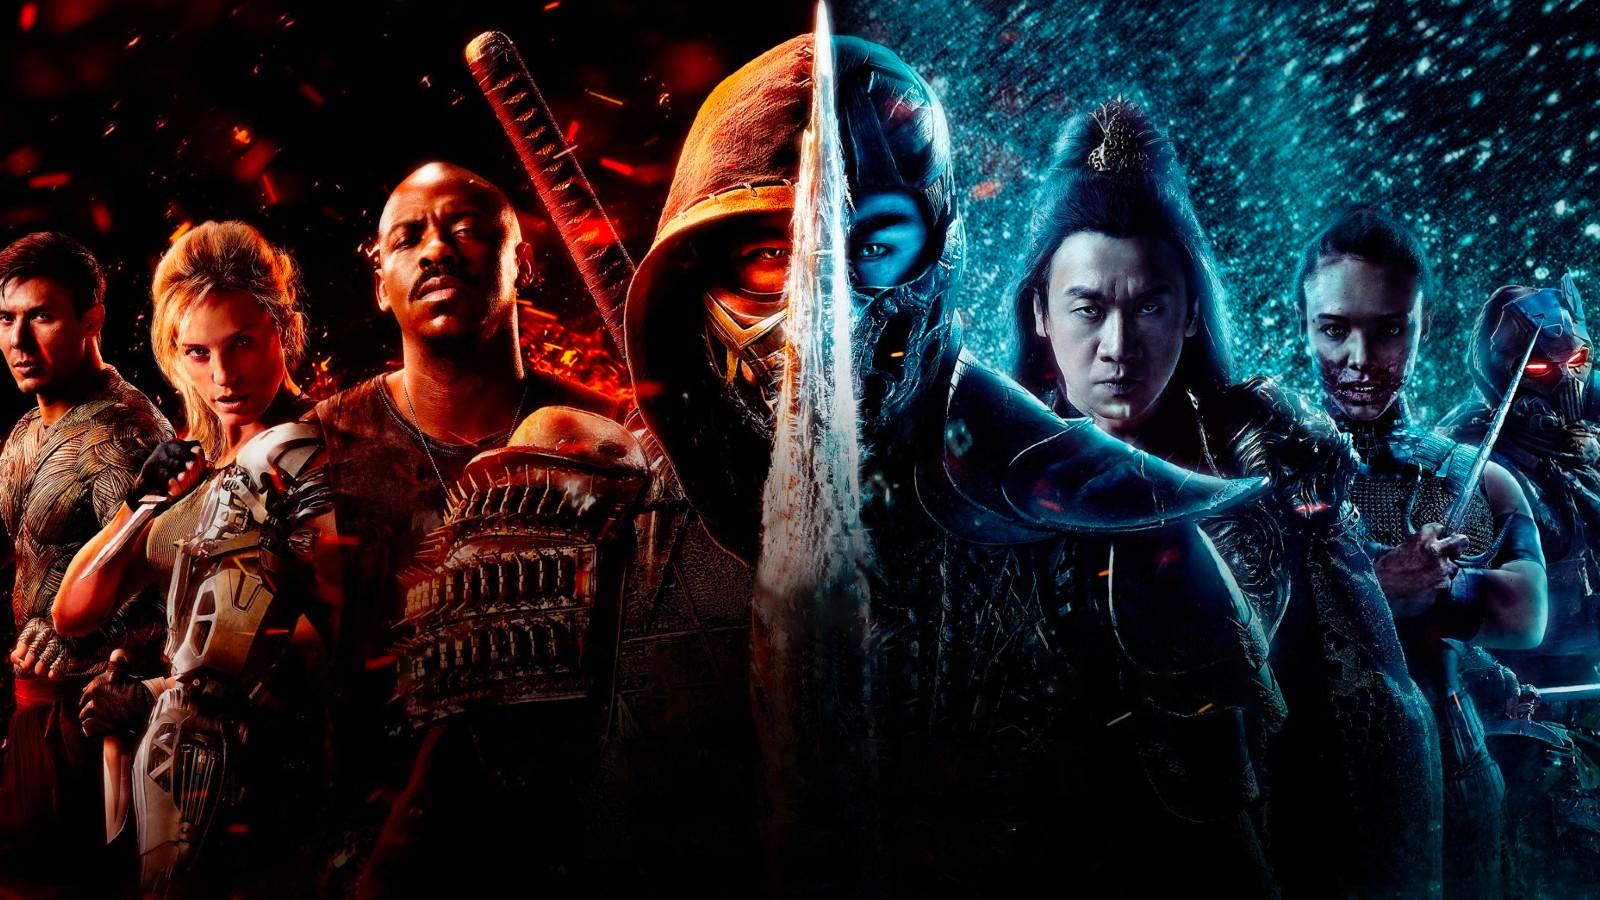 The poster for Mortal Kombat